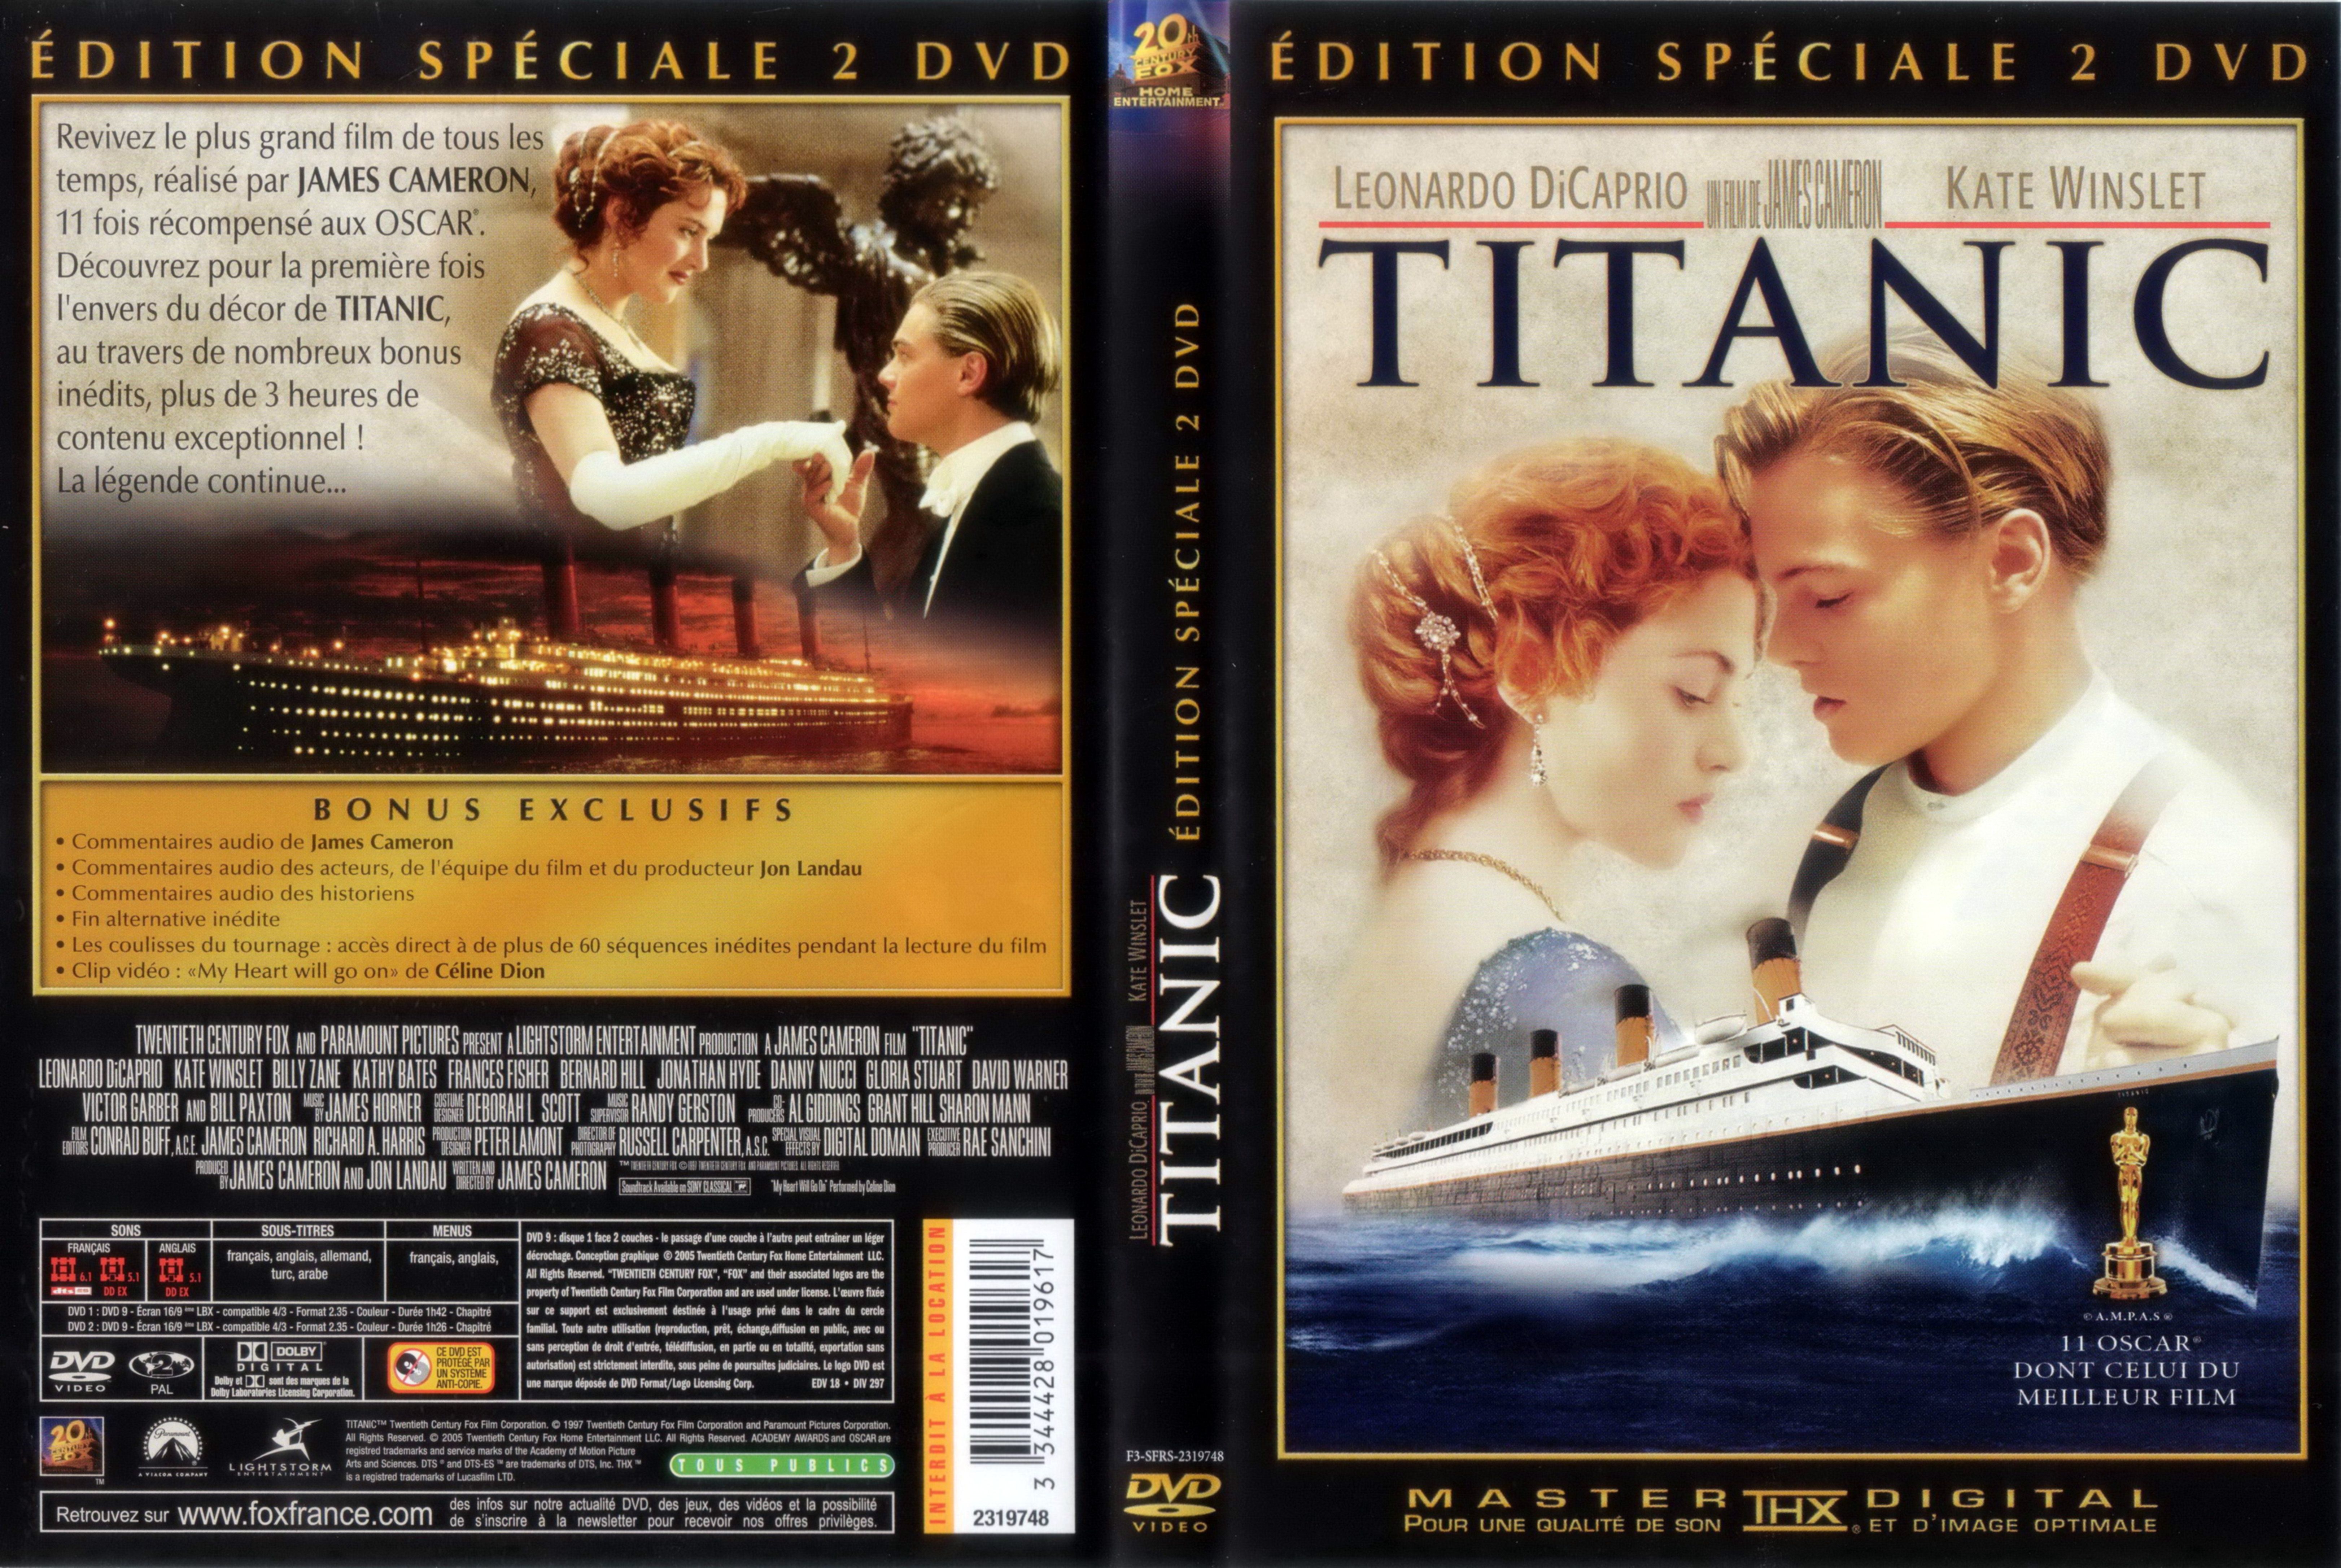 Jaquette DVD Titanic v3